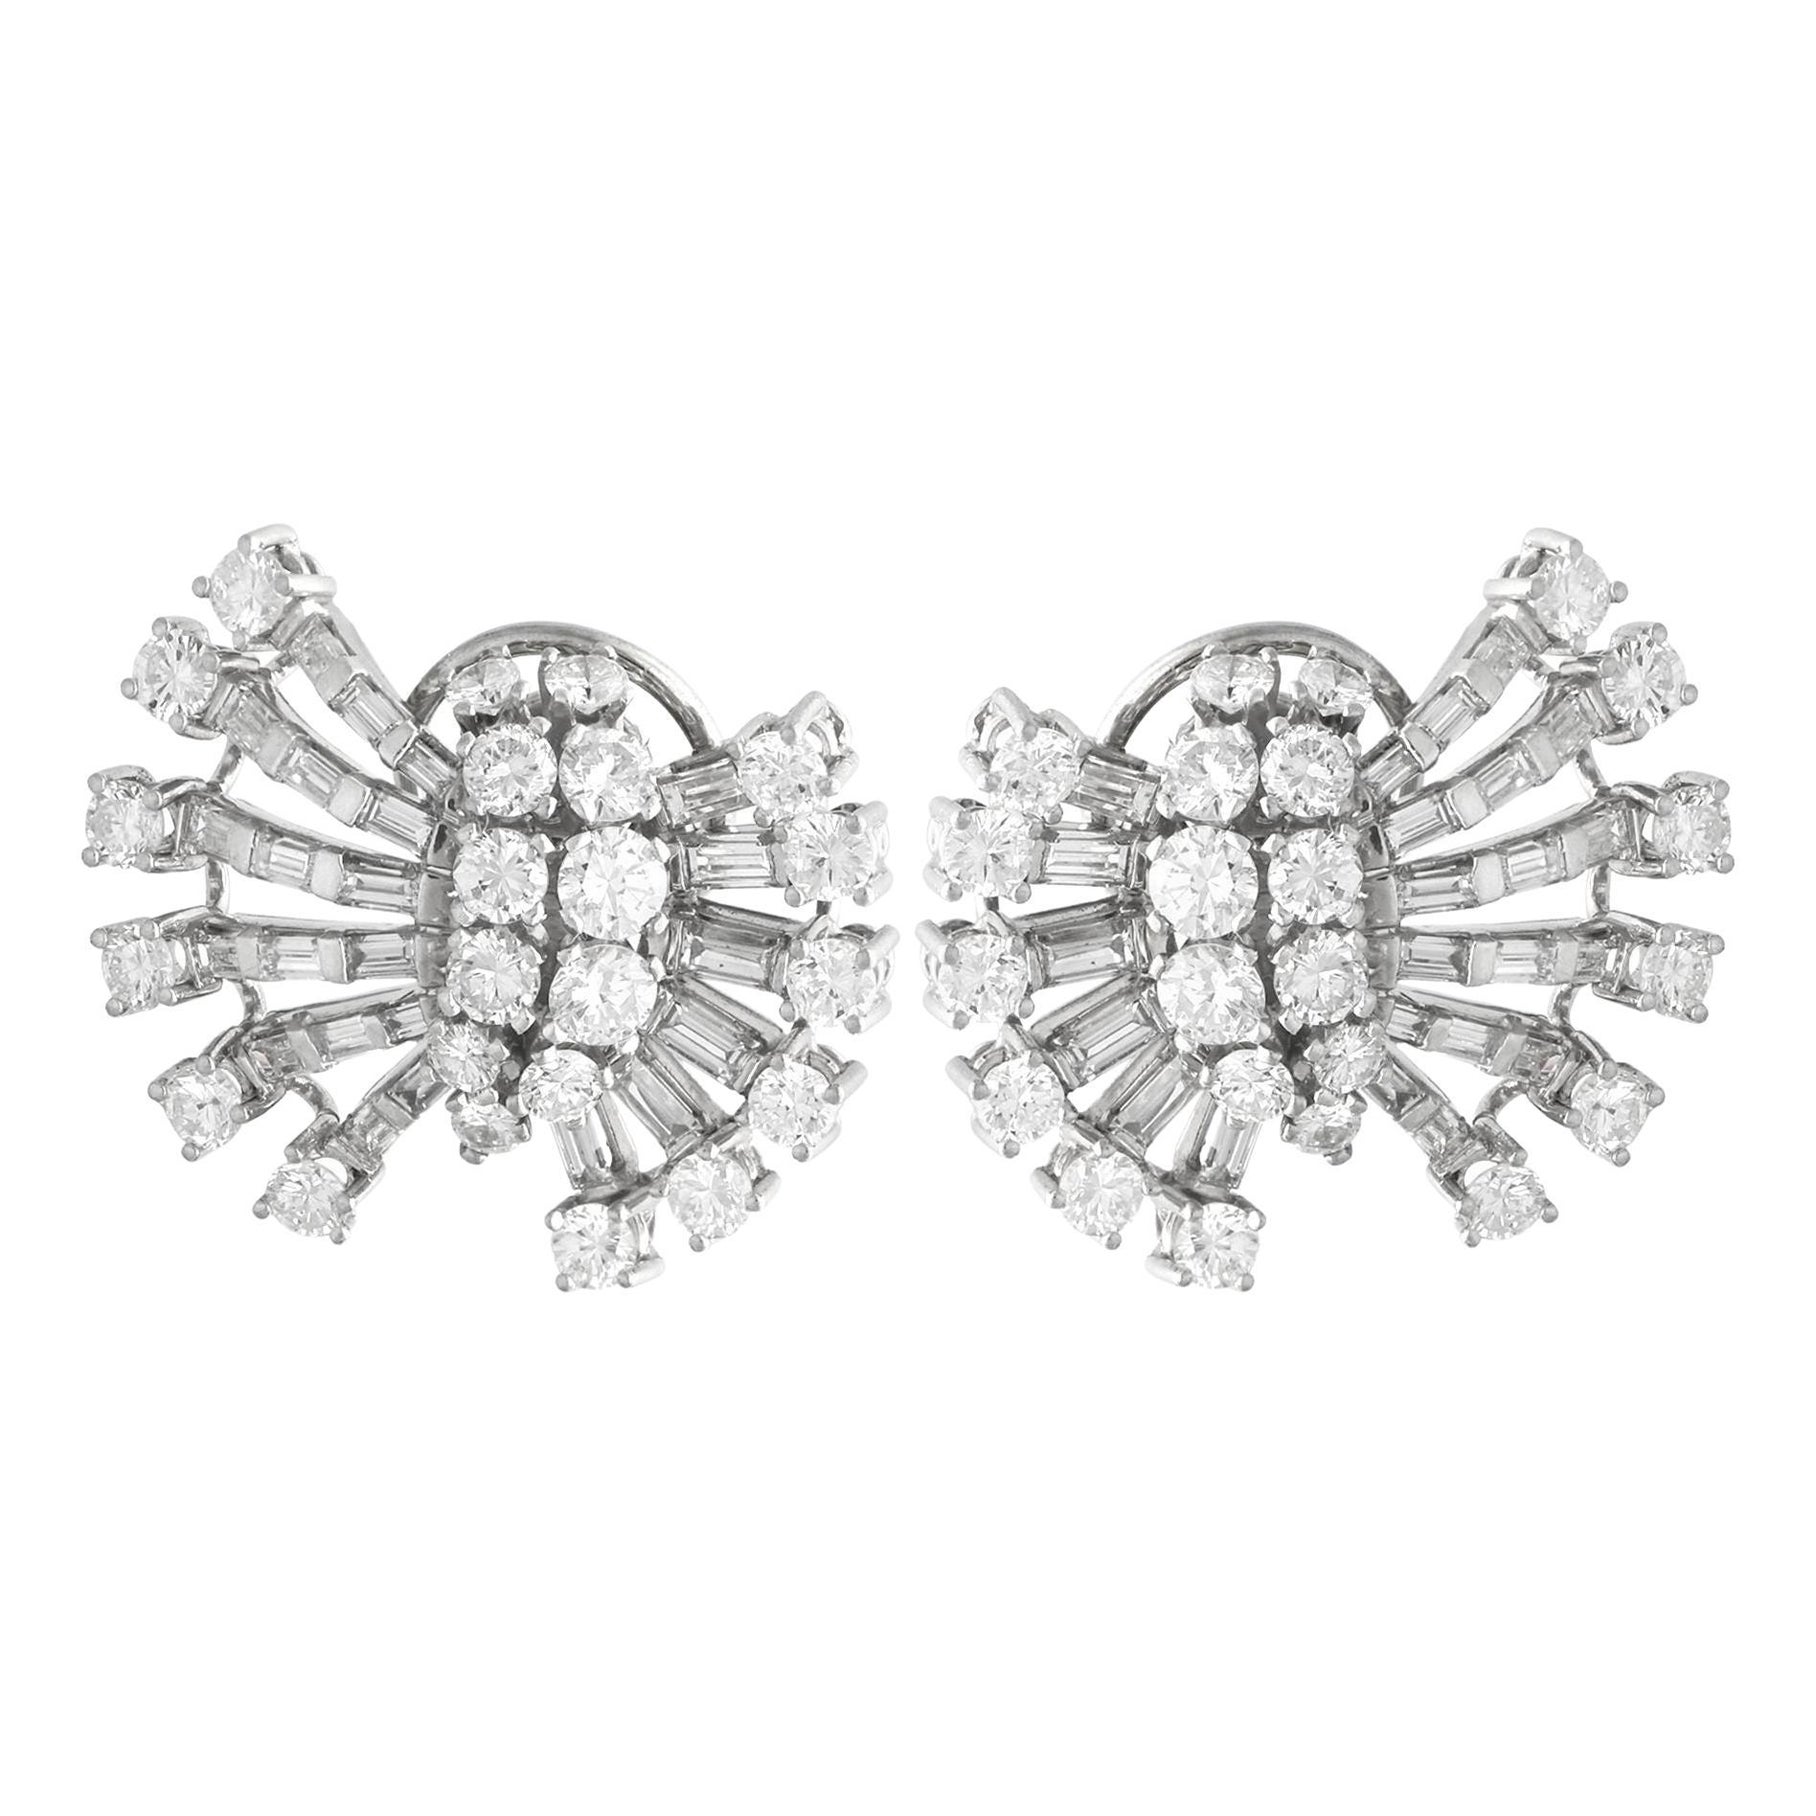 Vintage Art Deco 5.16ct Diamond and Platinum Earrings, Circa 1950